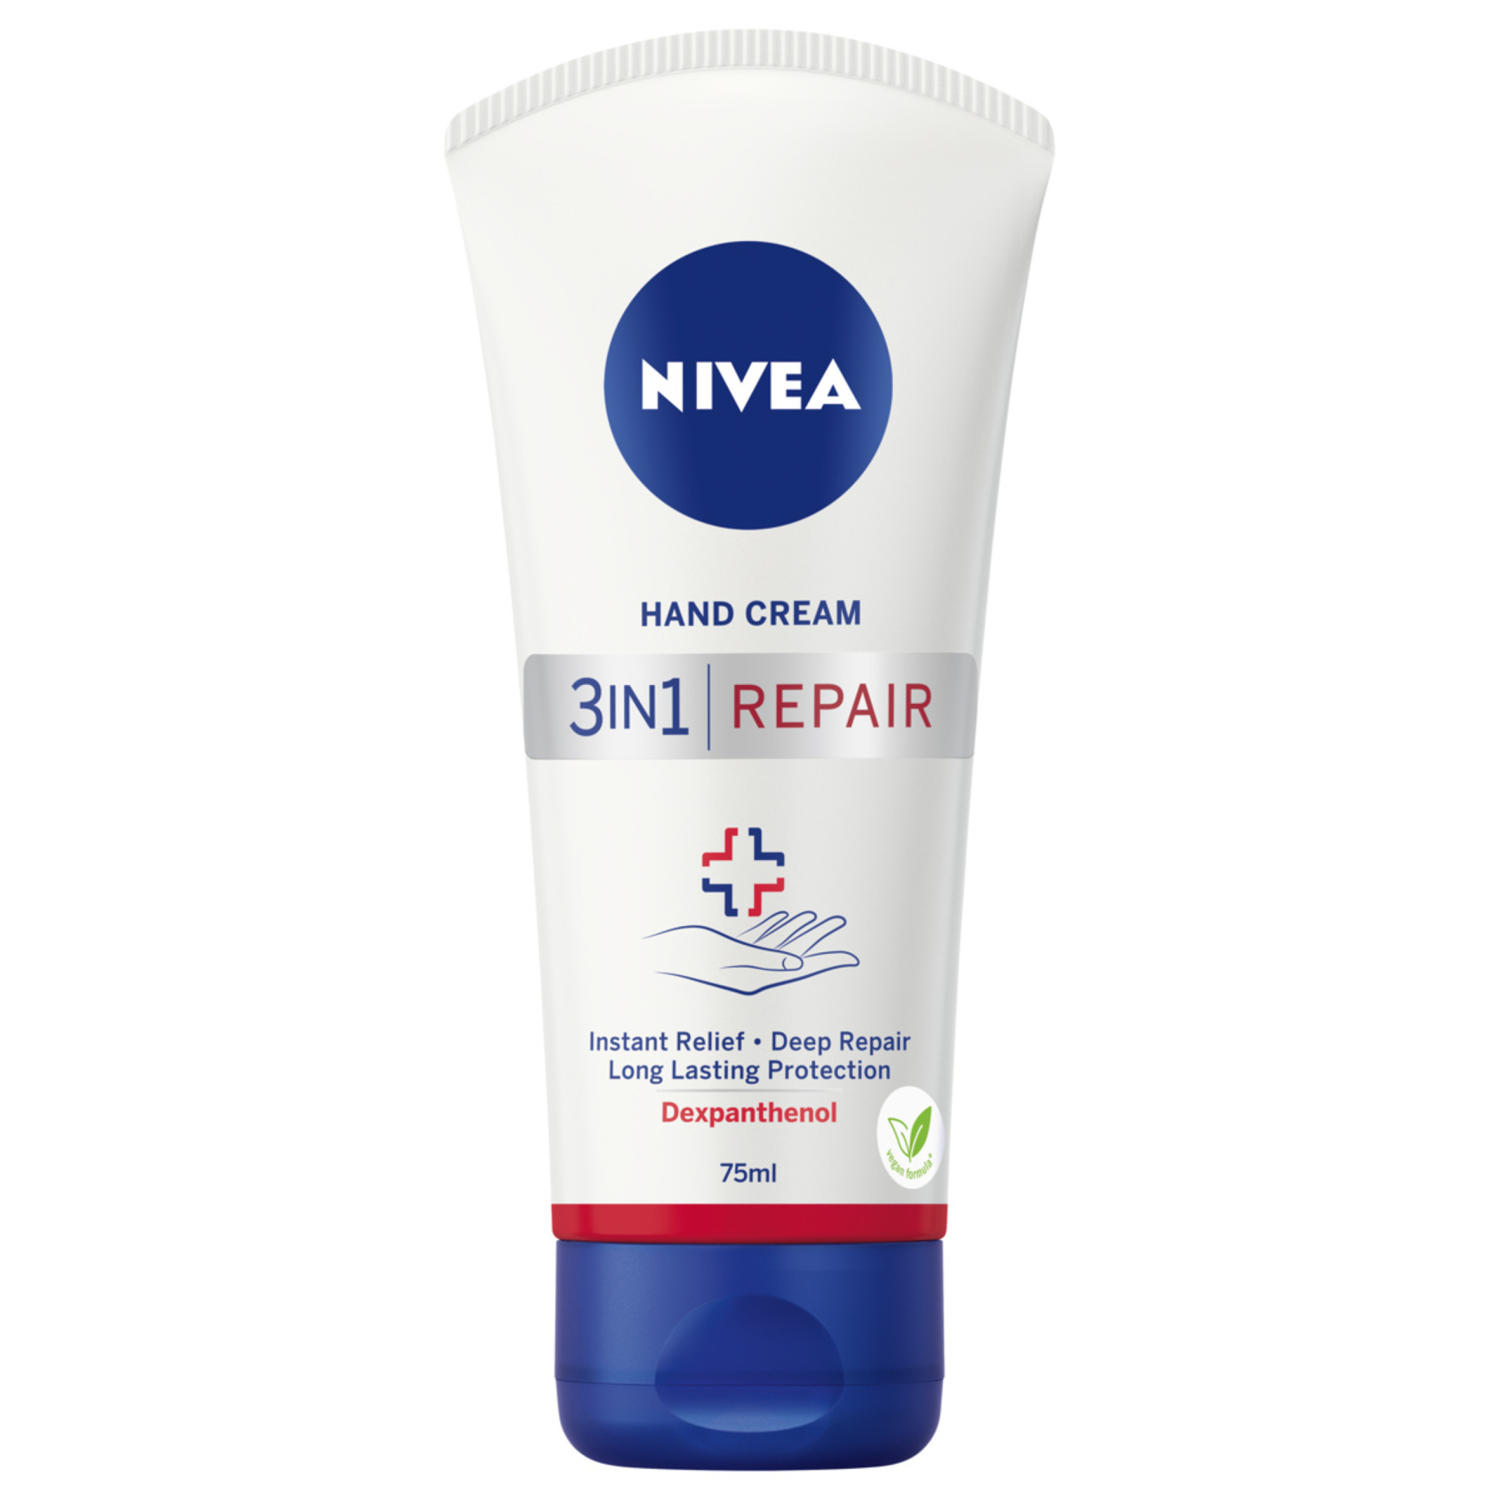 Nivea Repair регенерирующий крем для рук 3в1 восстанавливающий уход, 75 мл academie крем youth repair увлажняющий регенерирующий уход восстанавливающий 50 мл